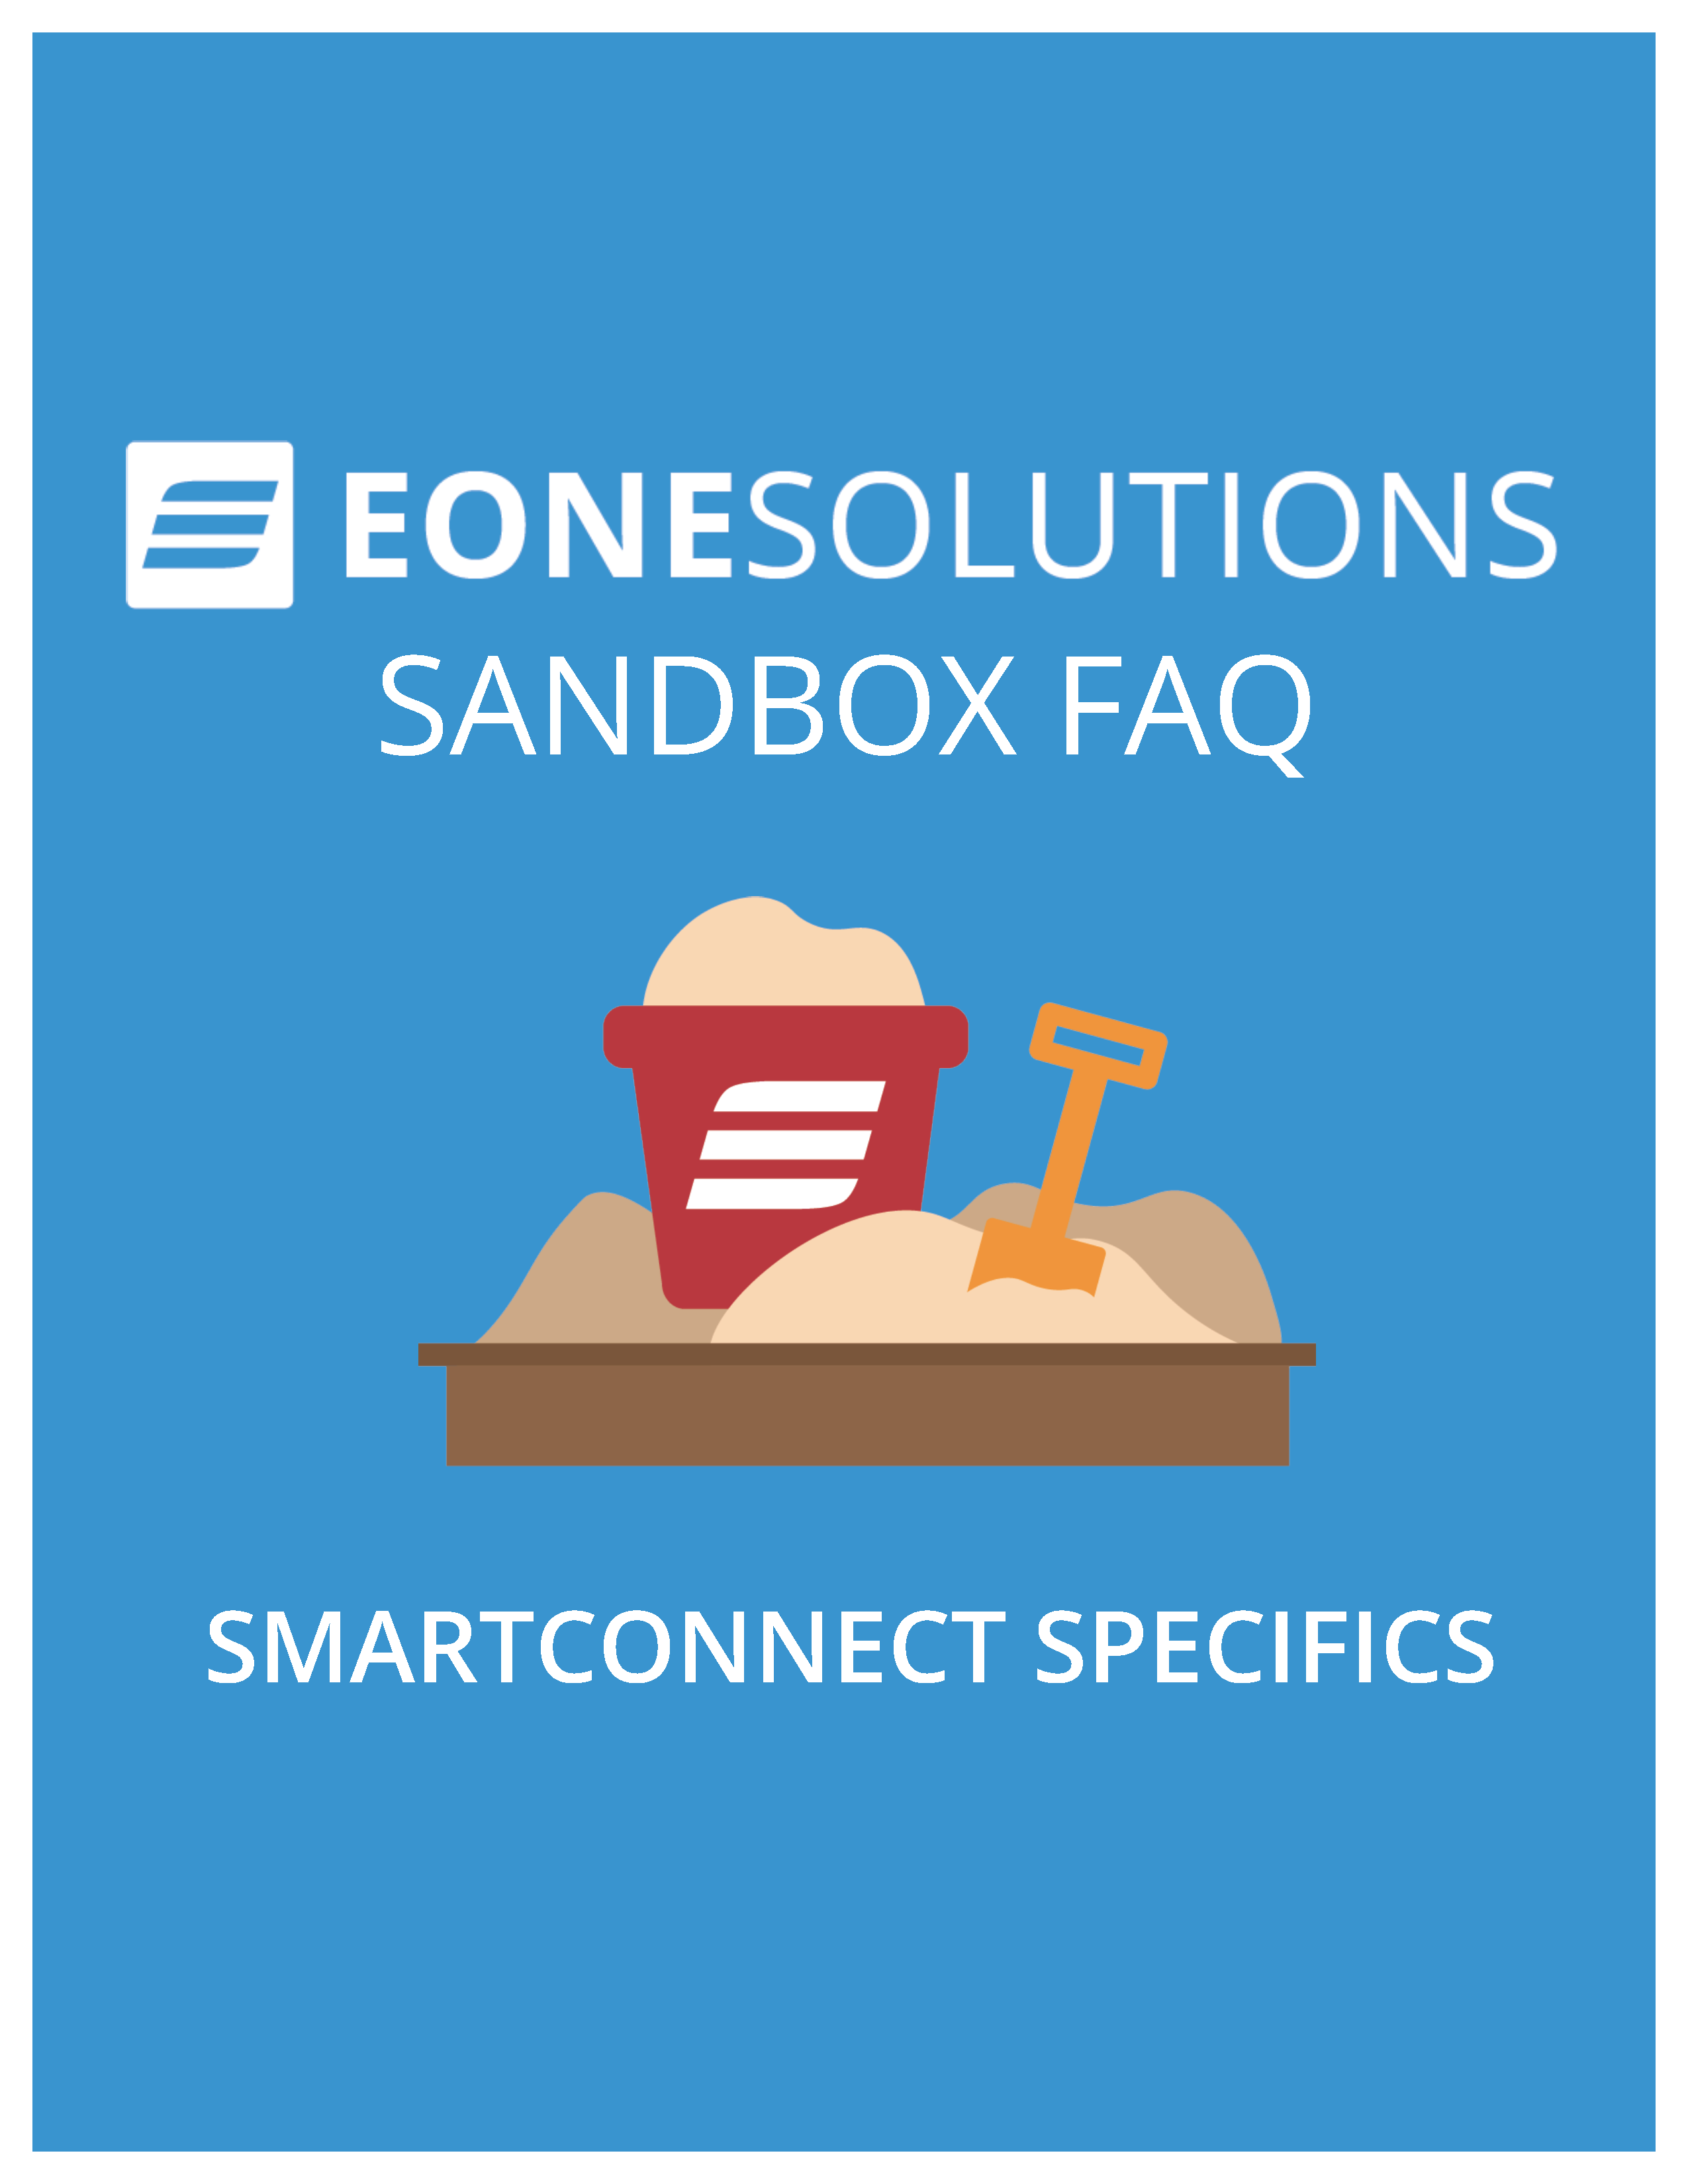 eOne Solutions Sandbox FAQ - SmartConnect Specifics